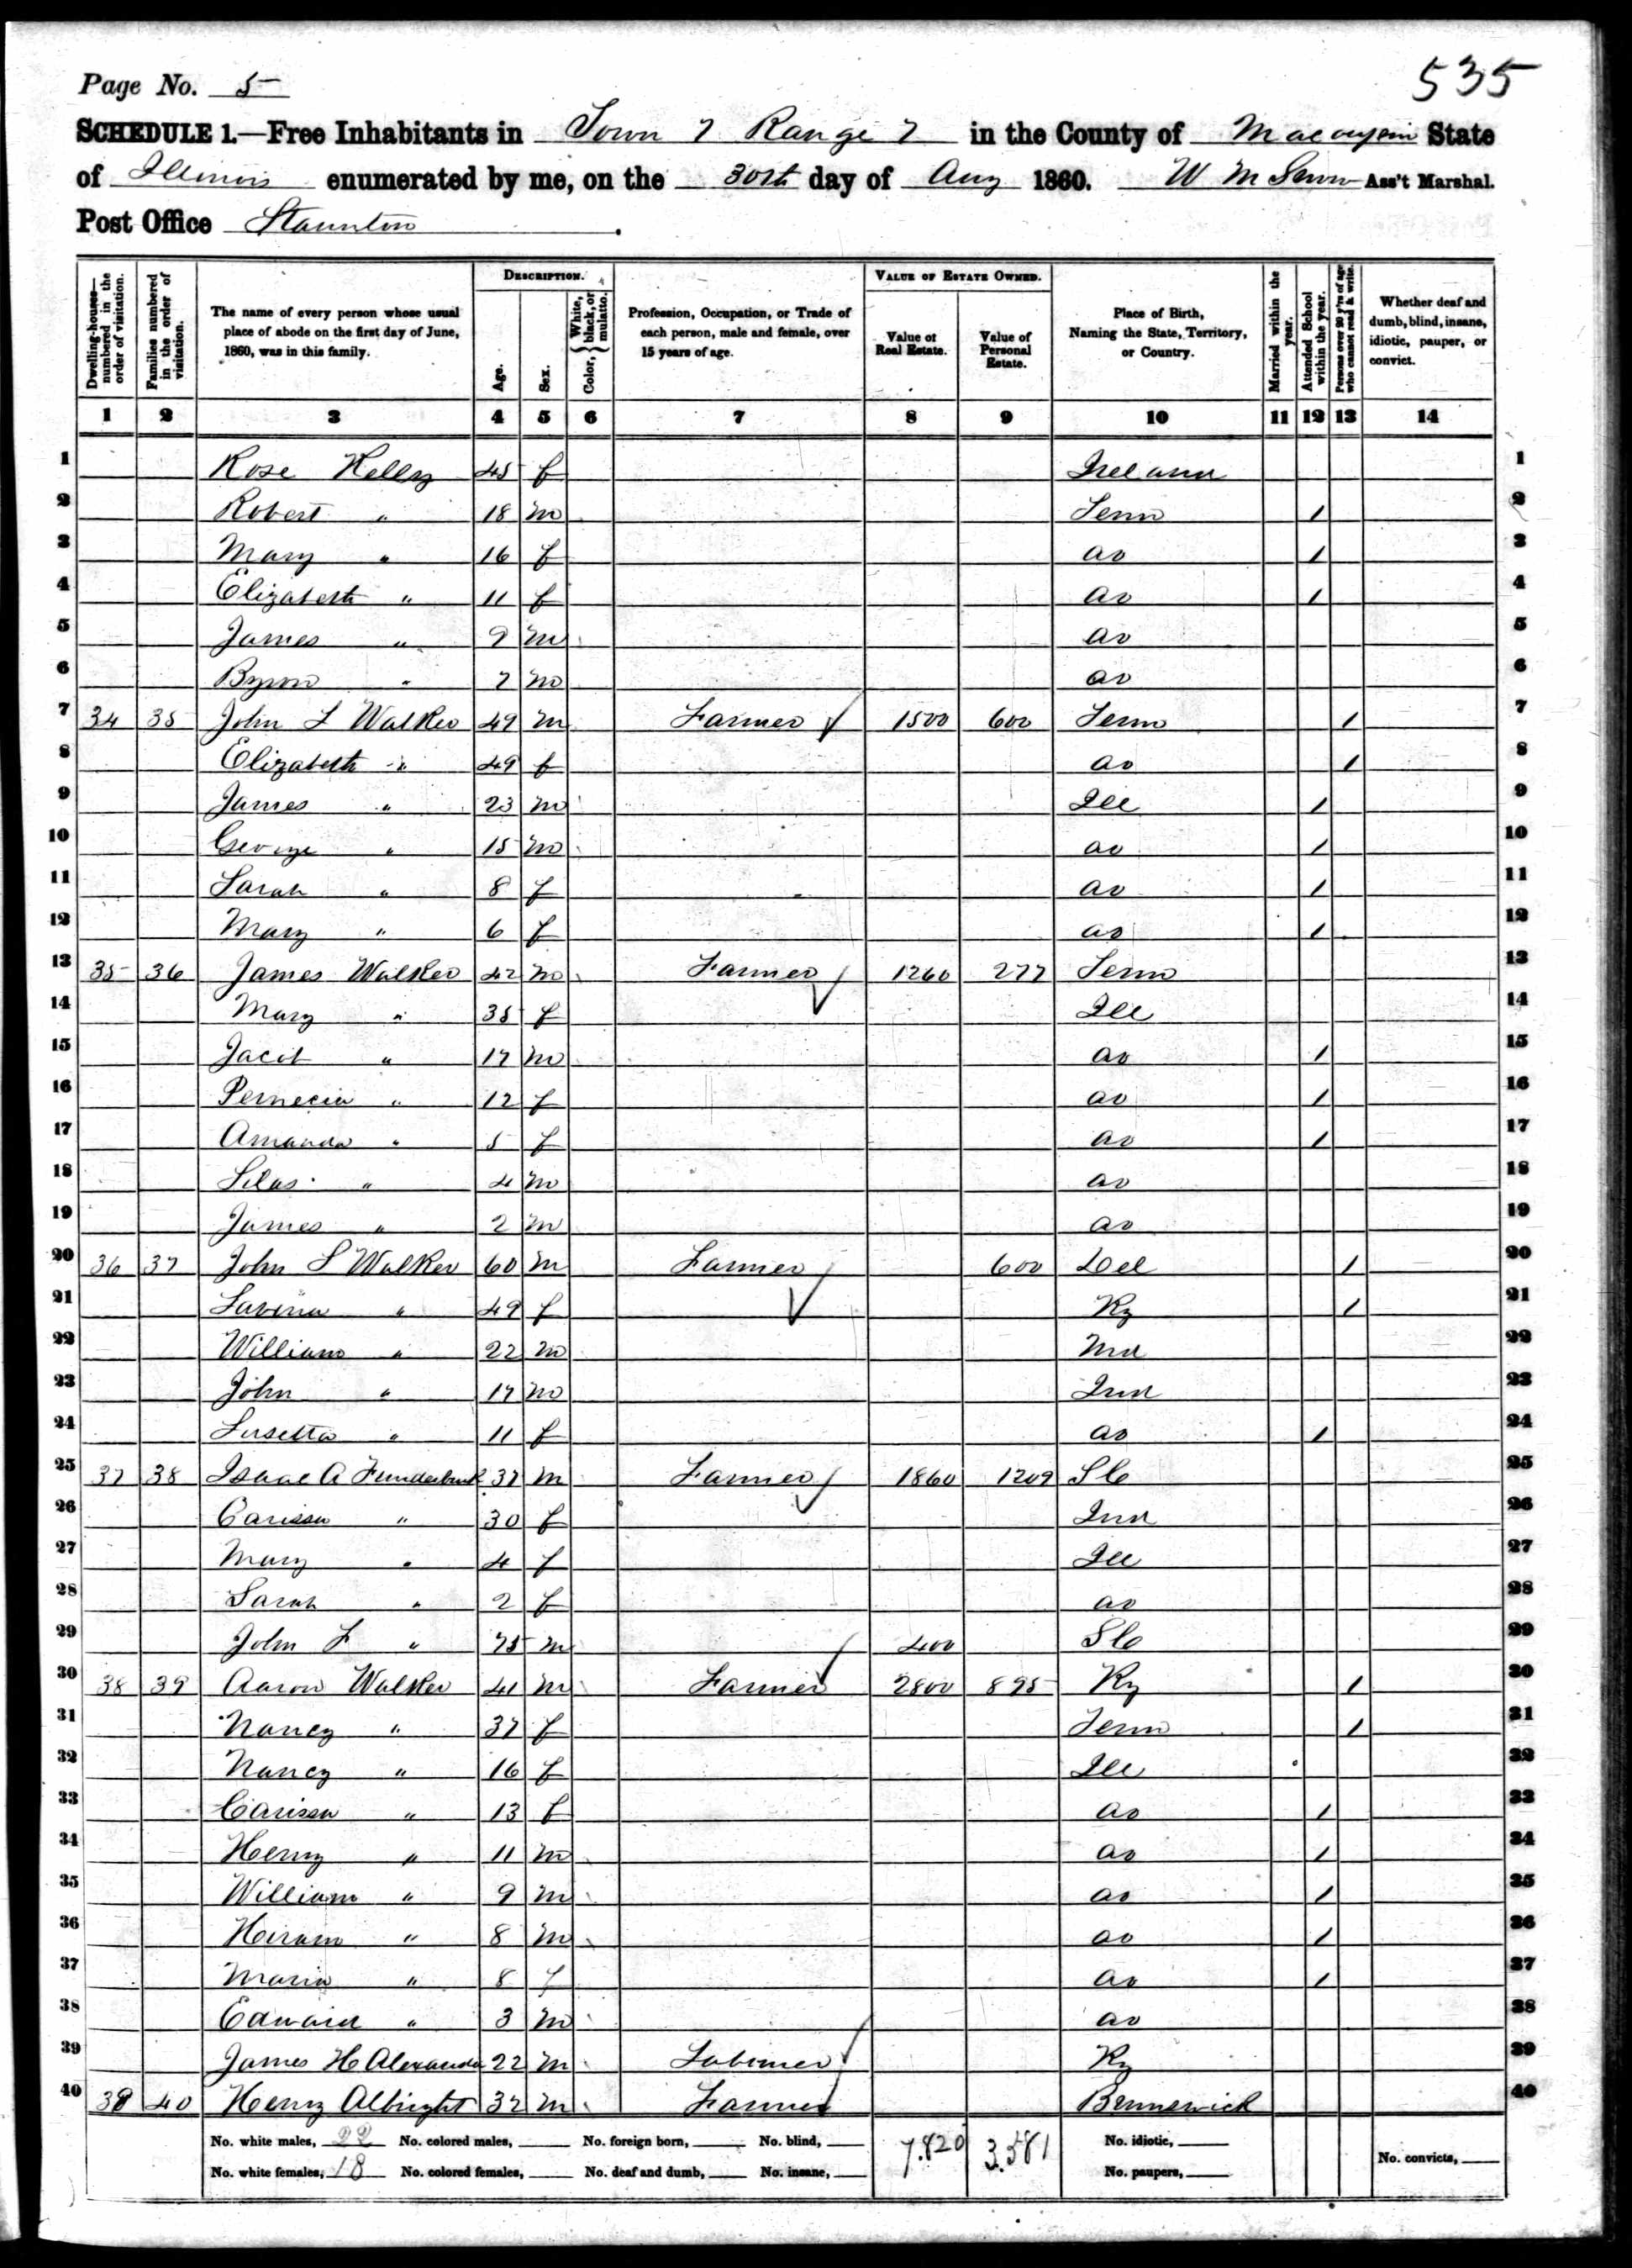 James Walker (1818), 1860 Macoupin County, Illinois, census